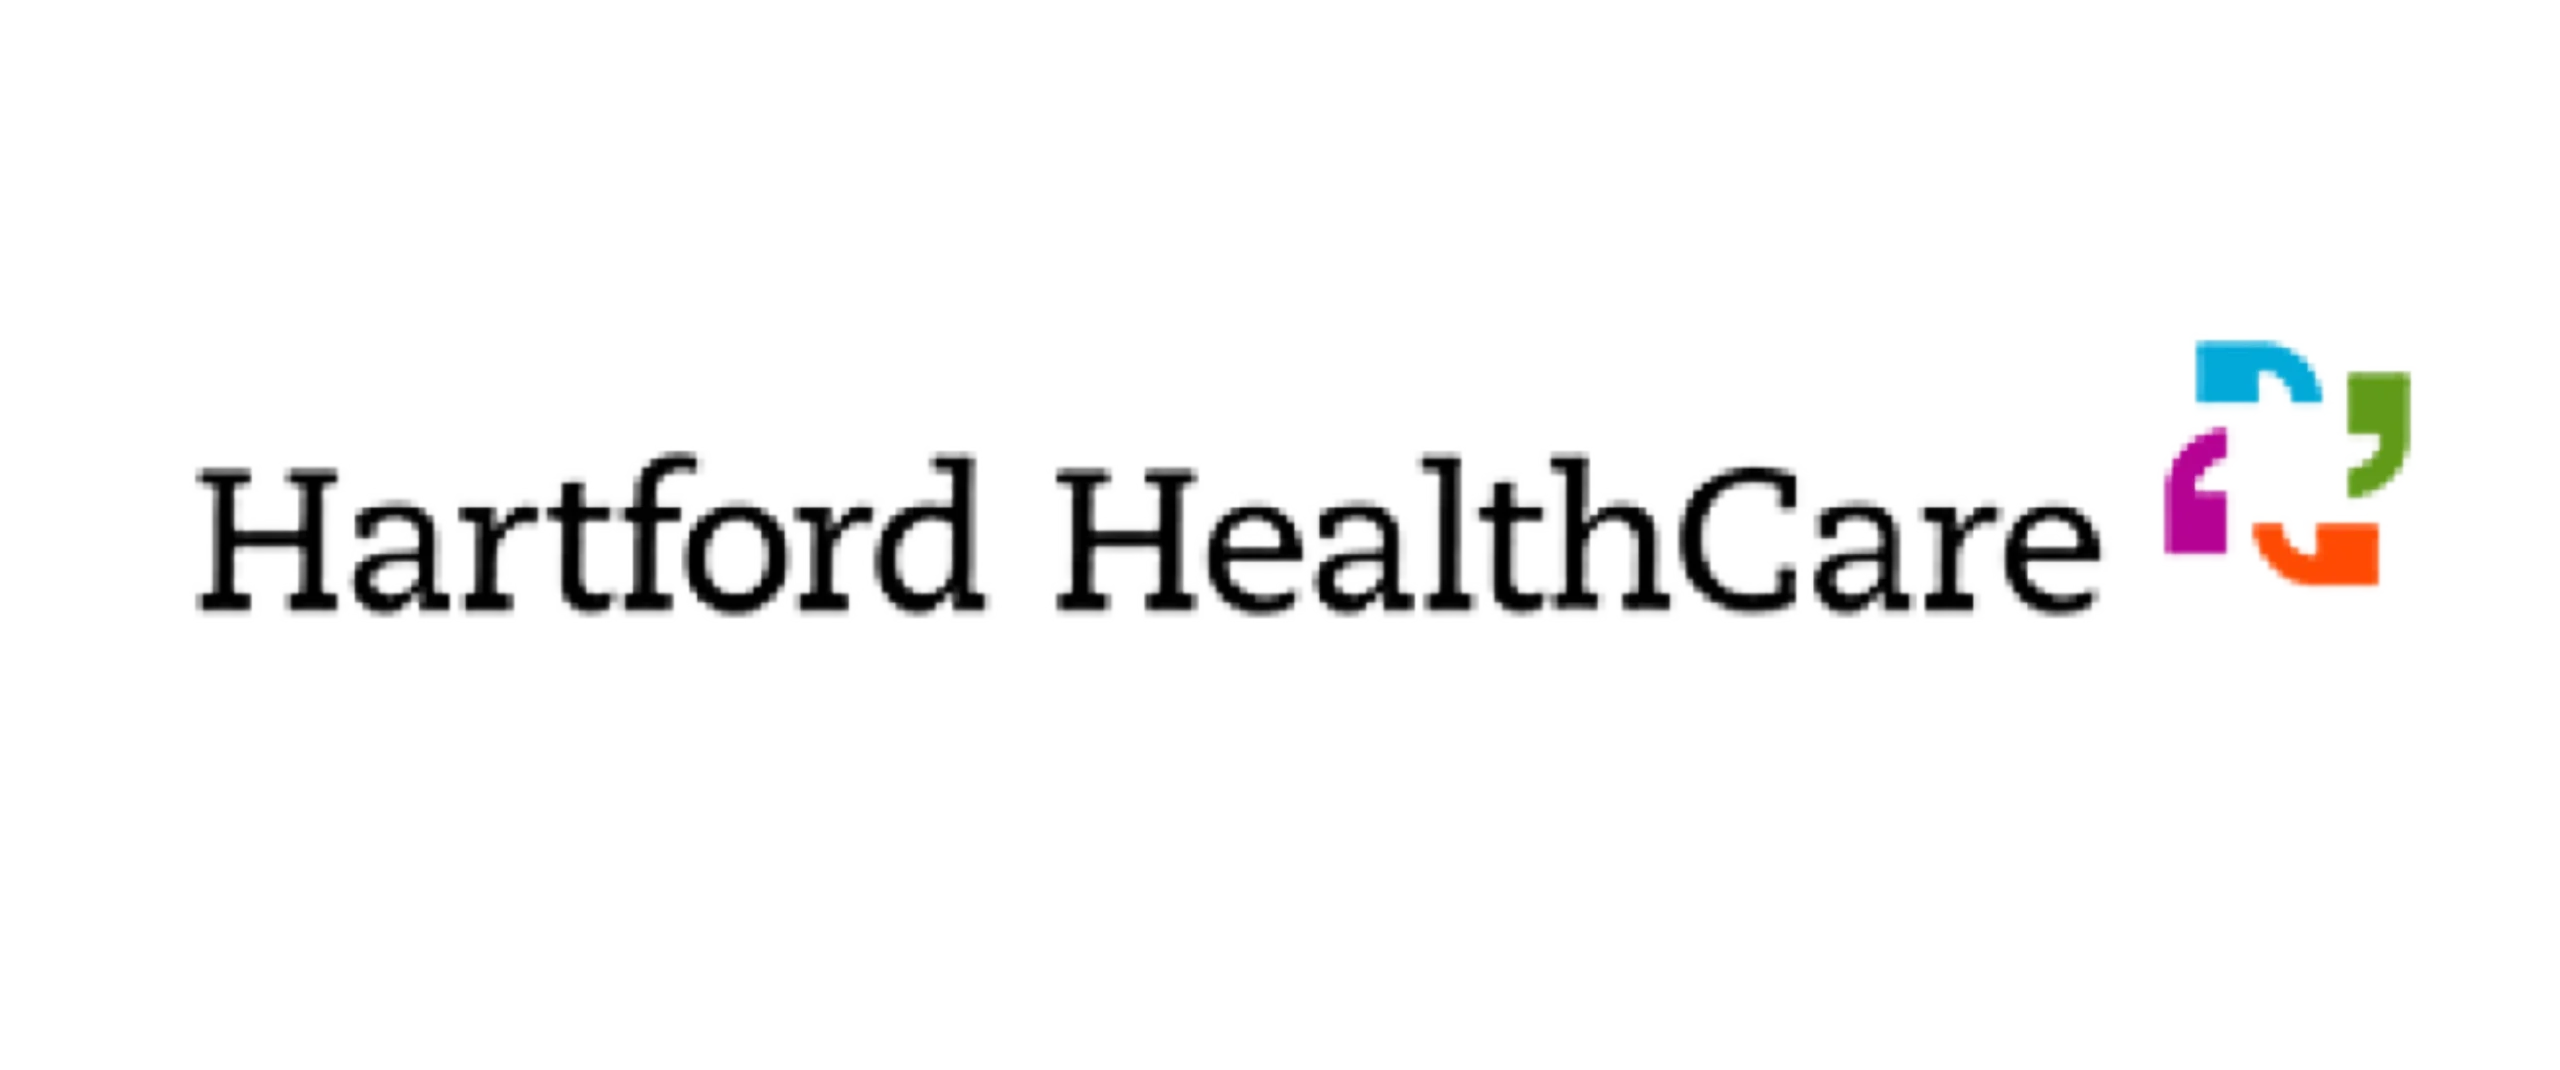 hartford health